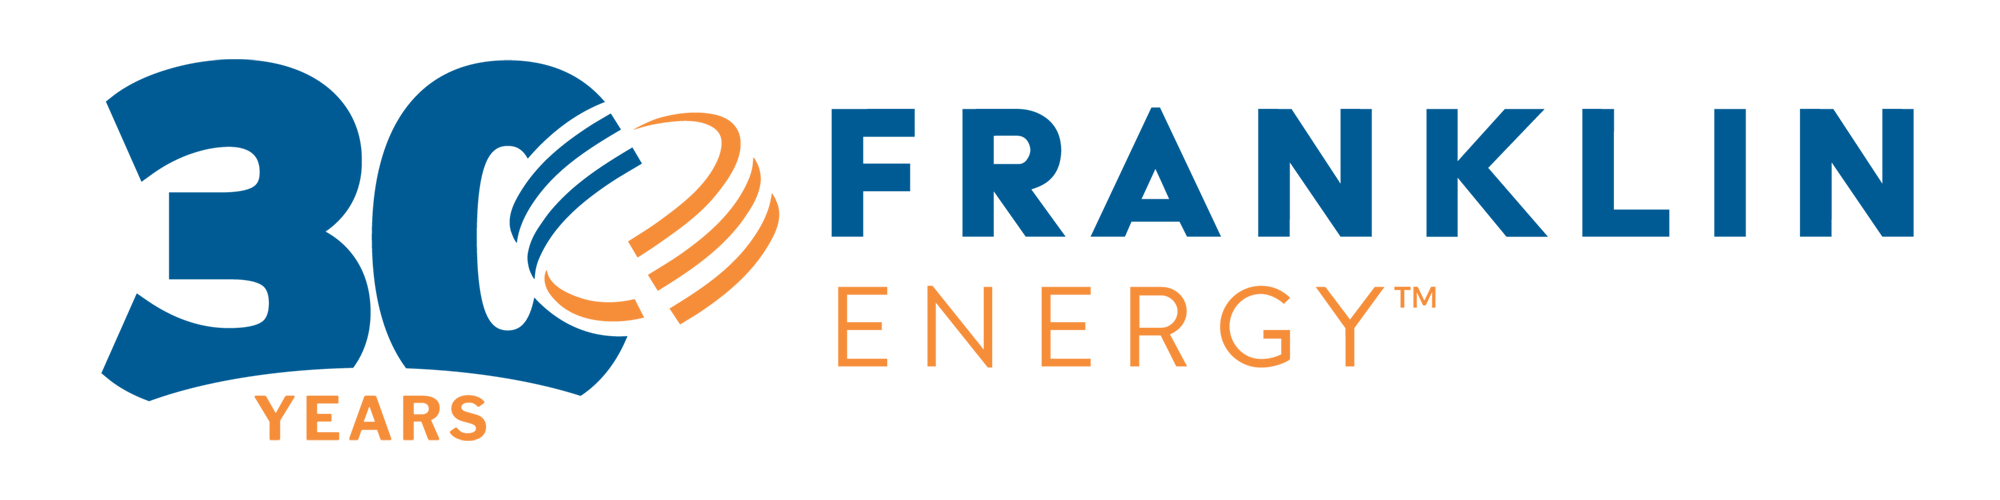 Franklin-Energy